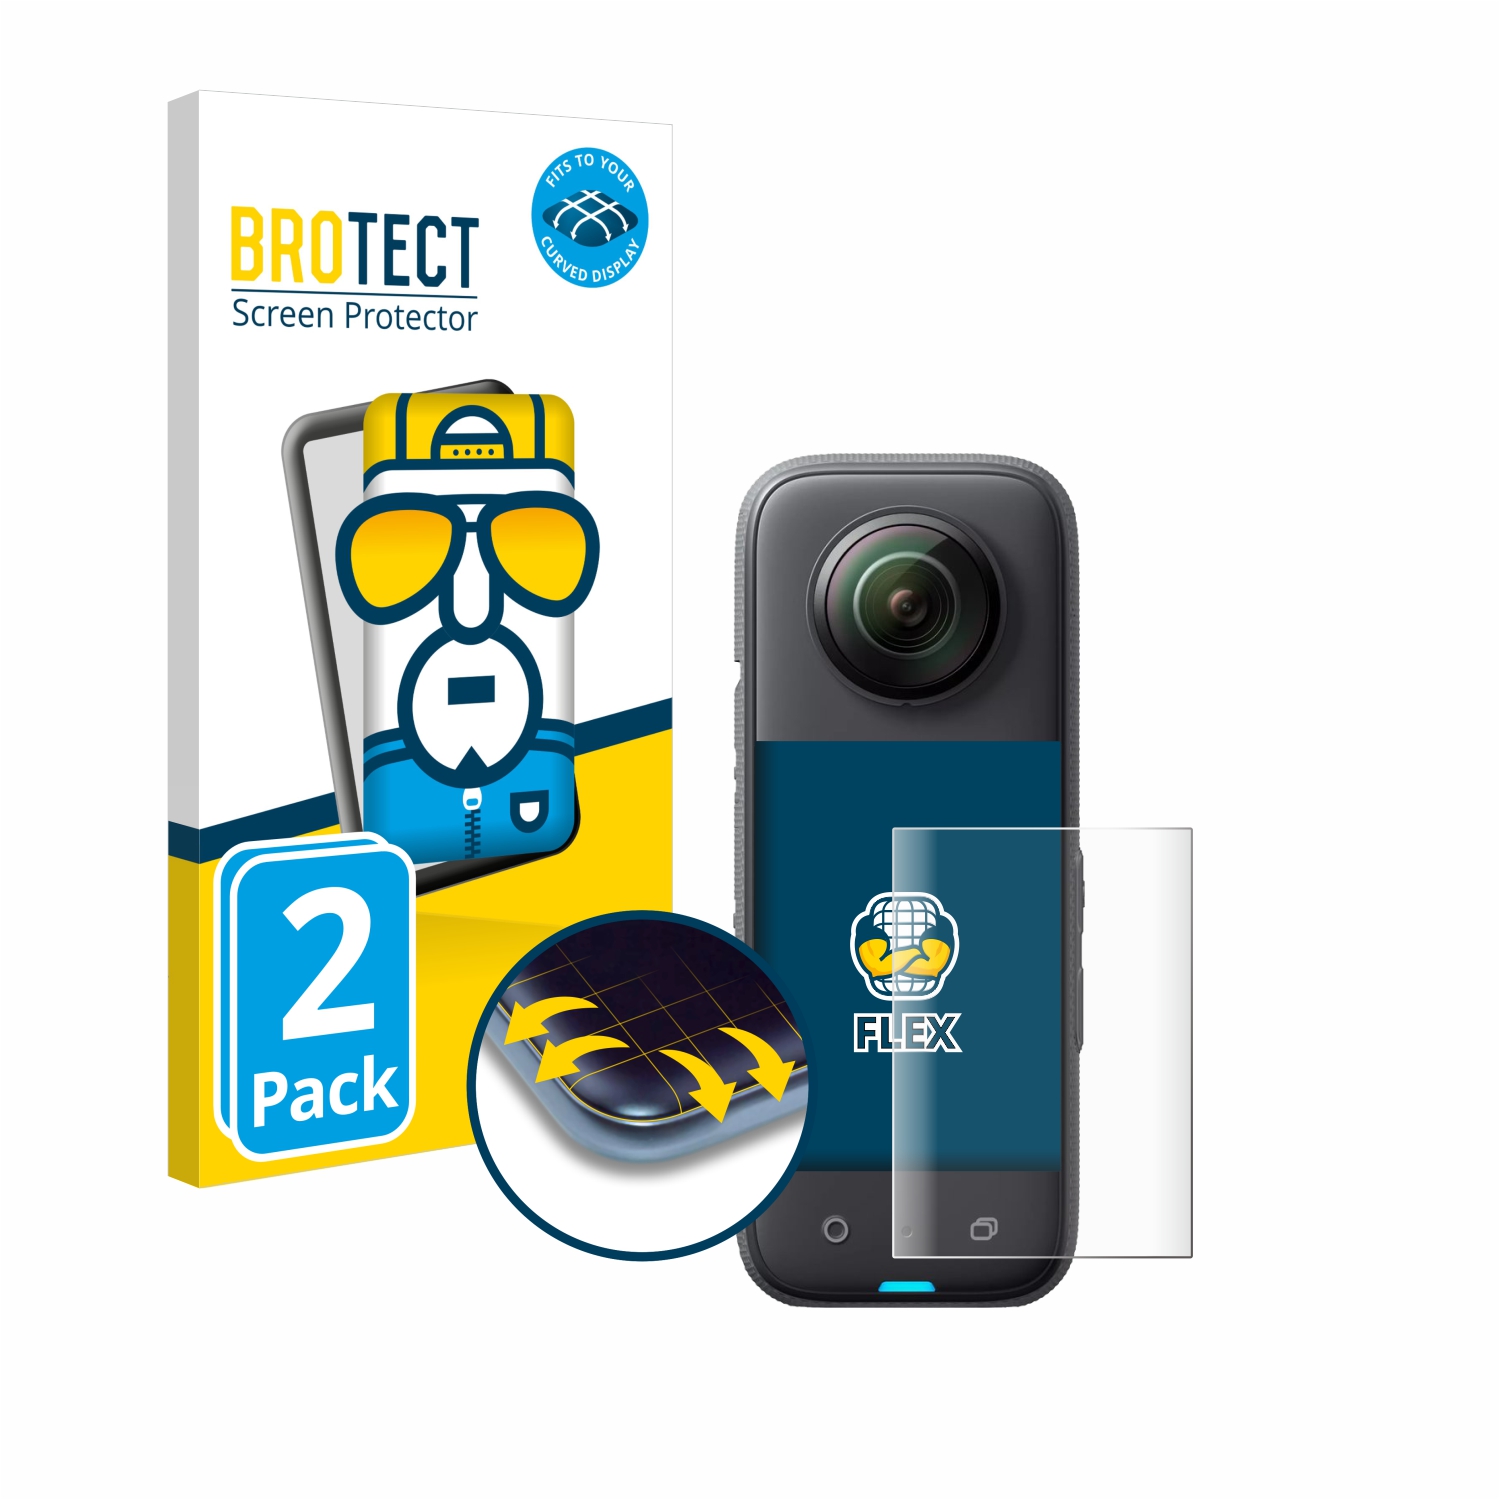 2 Pièces brotect Protection Ecran Anti-Reflet Compatible avec Canon EOS 70D Film Protection Ecran Mat 